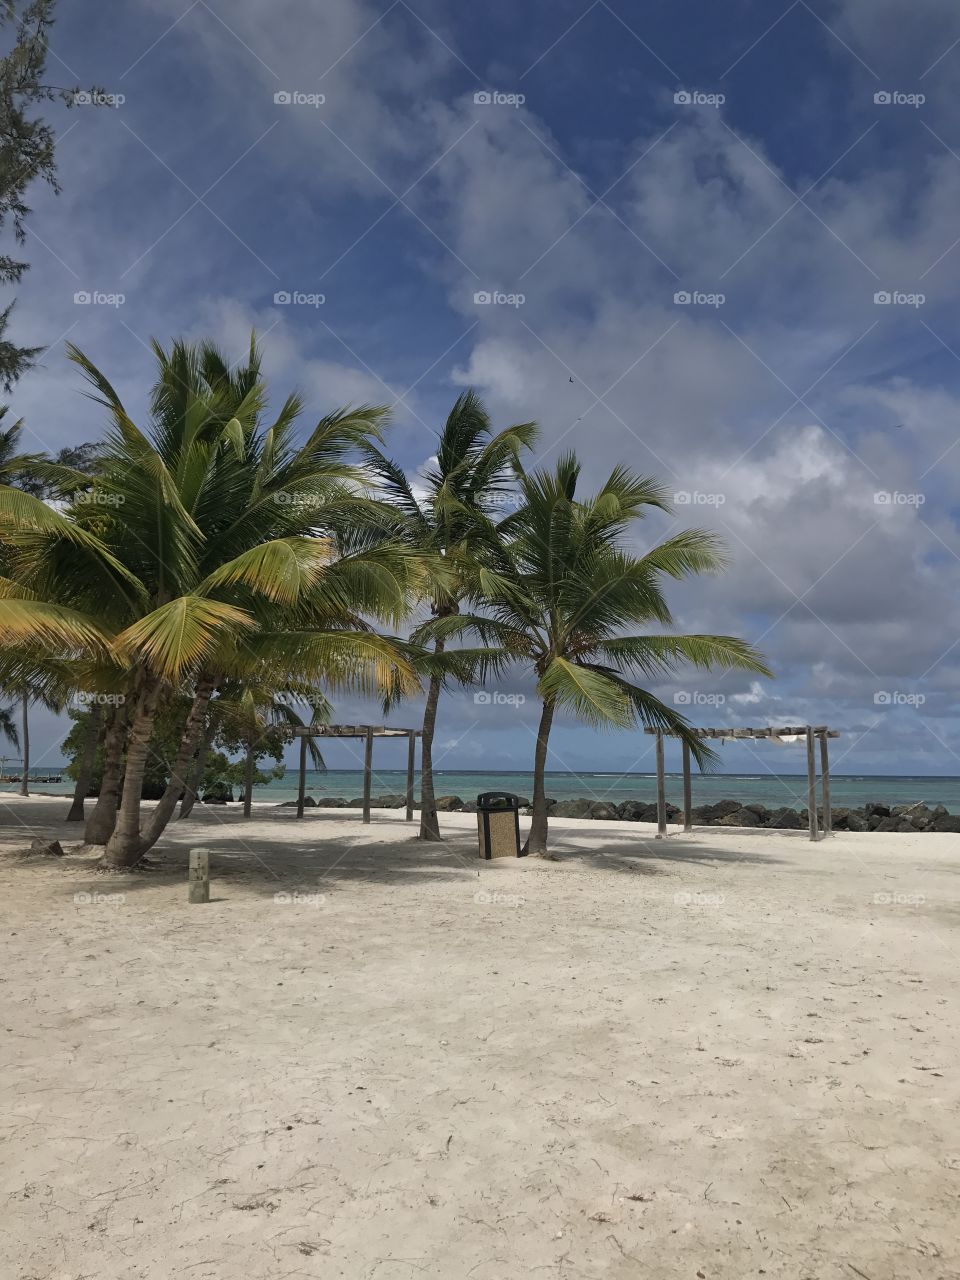 Dominican Republic Beach